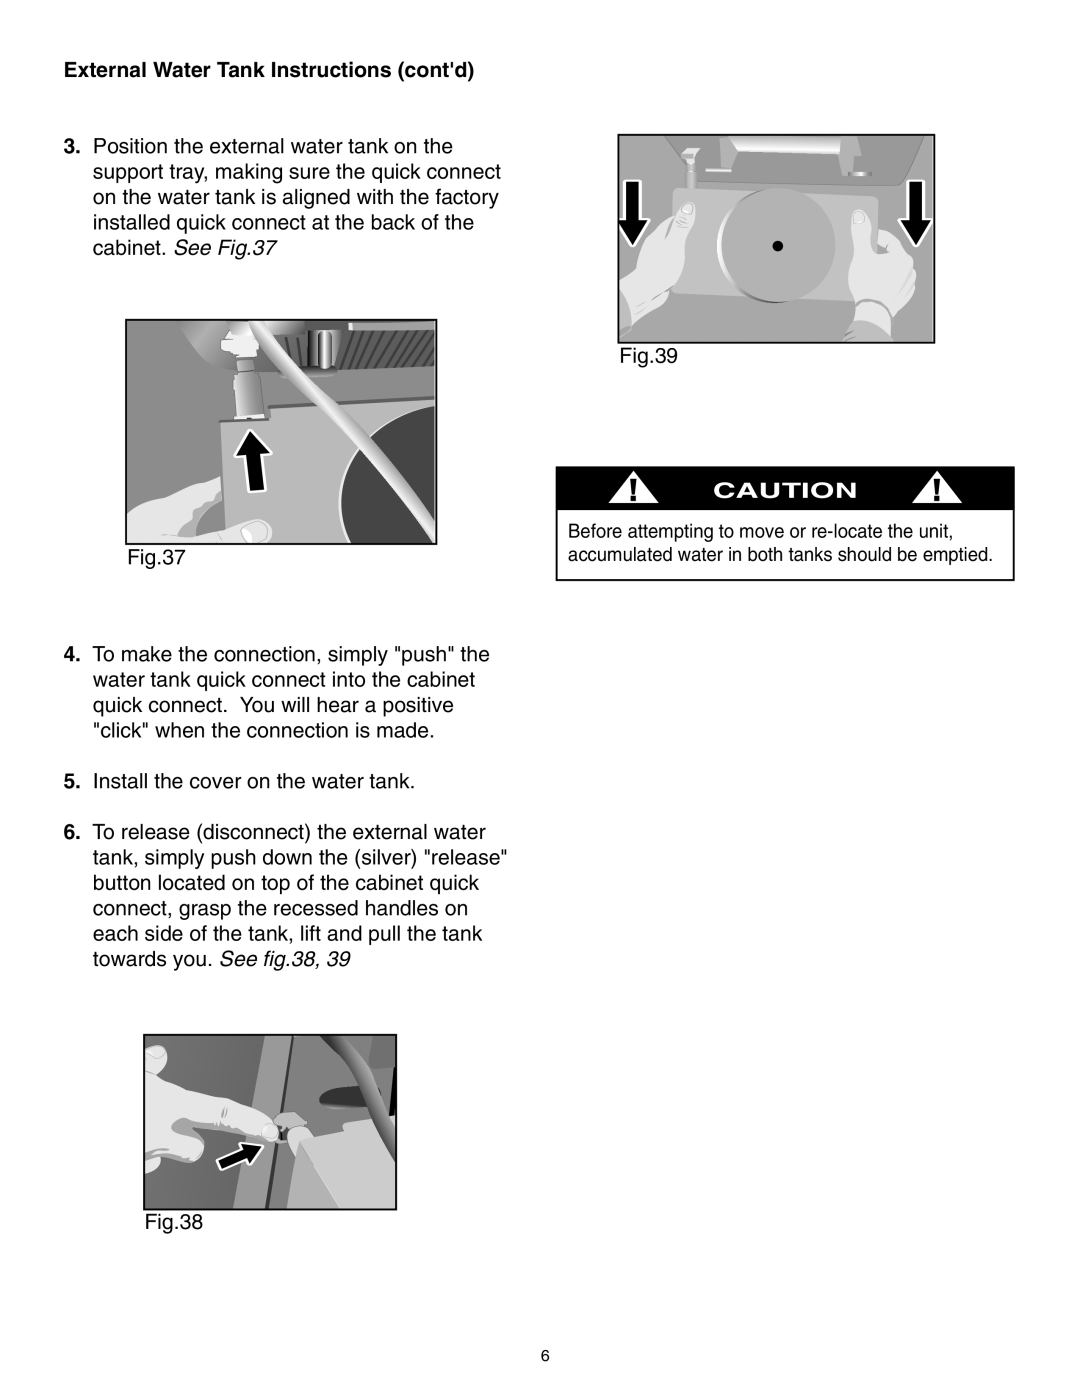 Danby SPAC8499 manual External Water Tank Instructions contd 